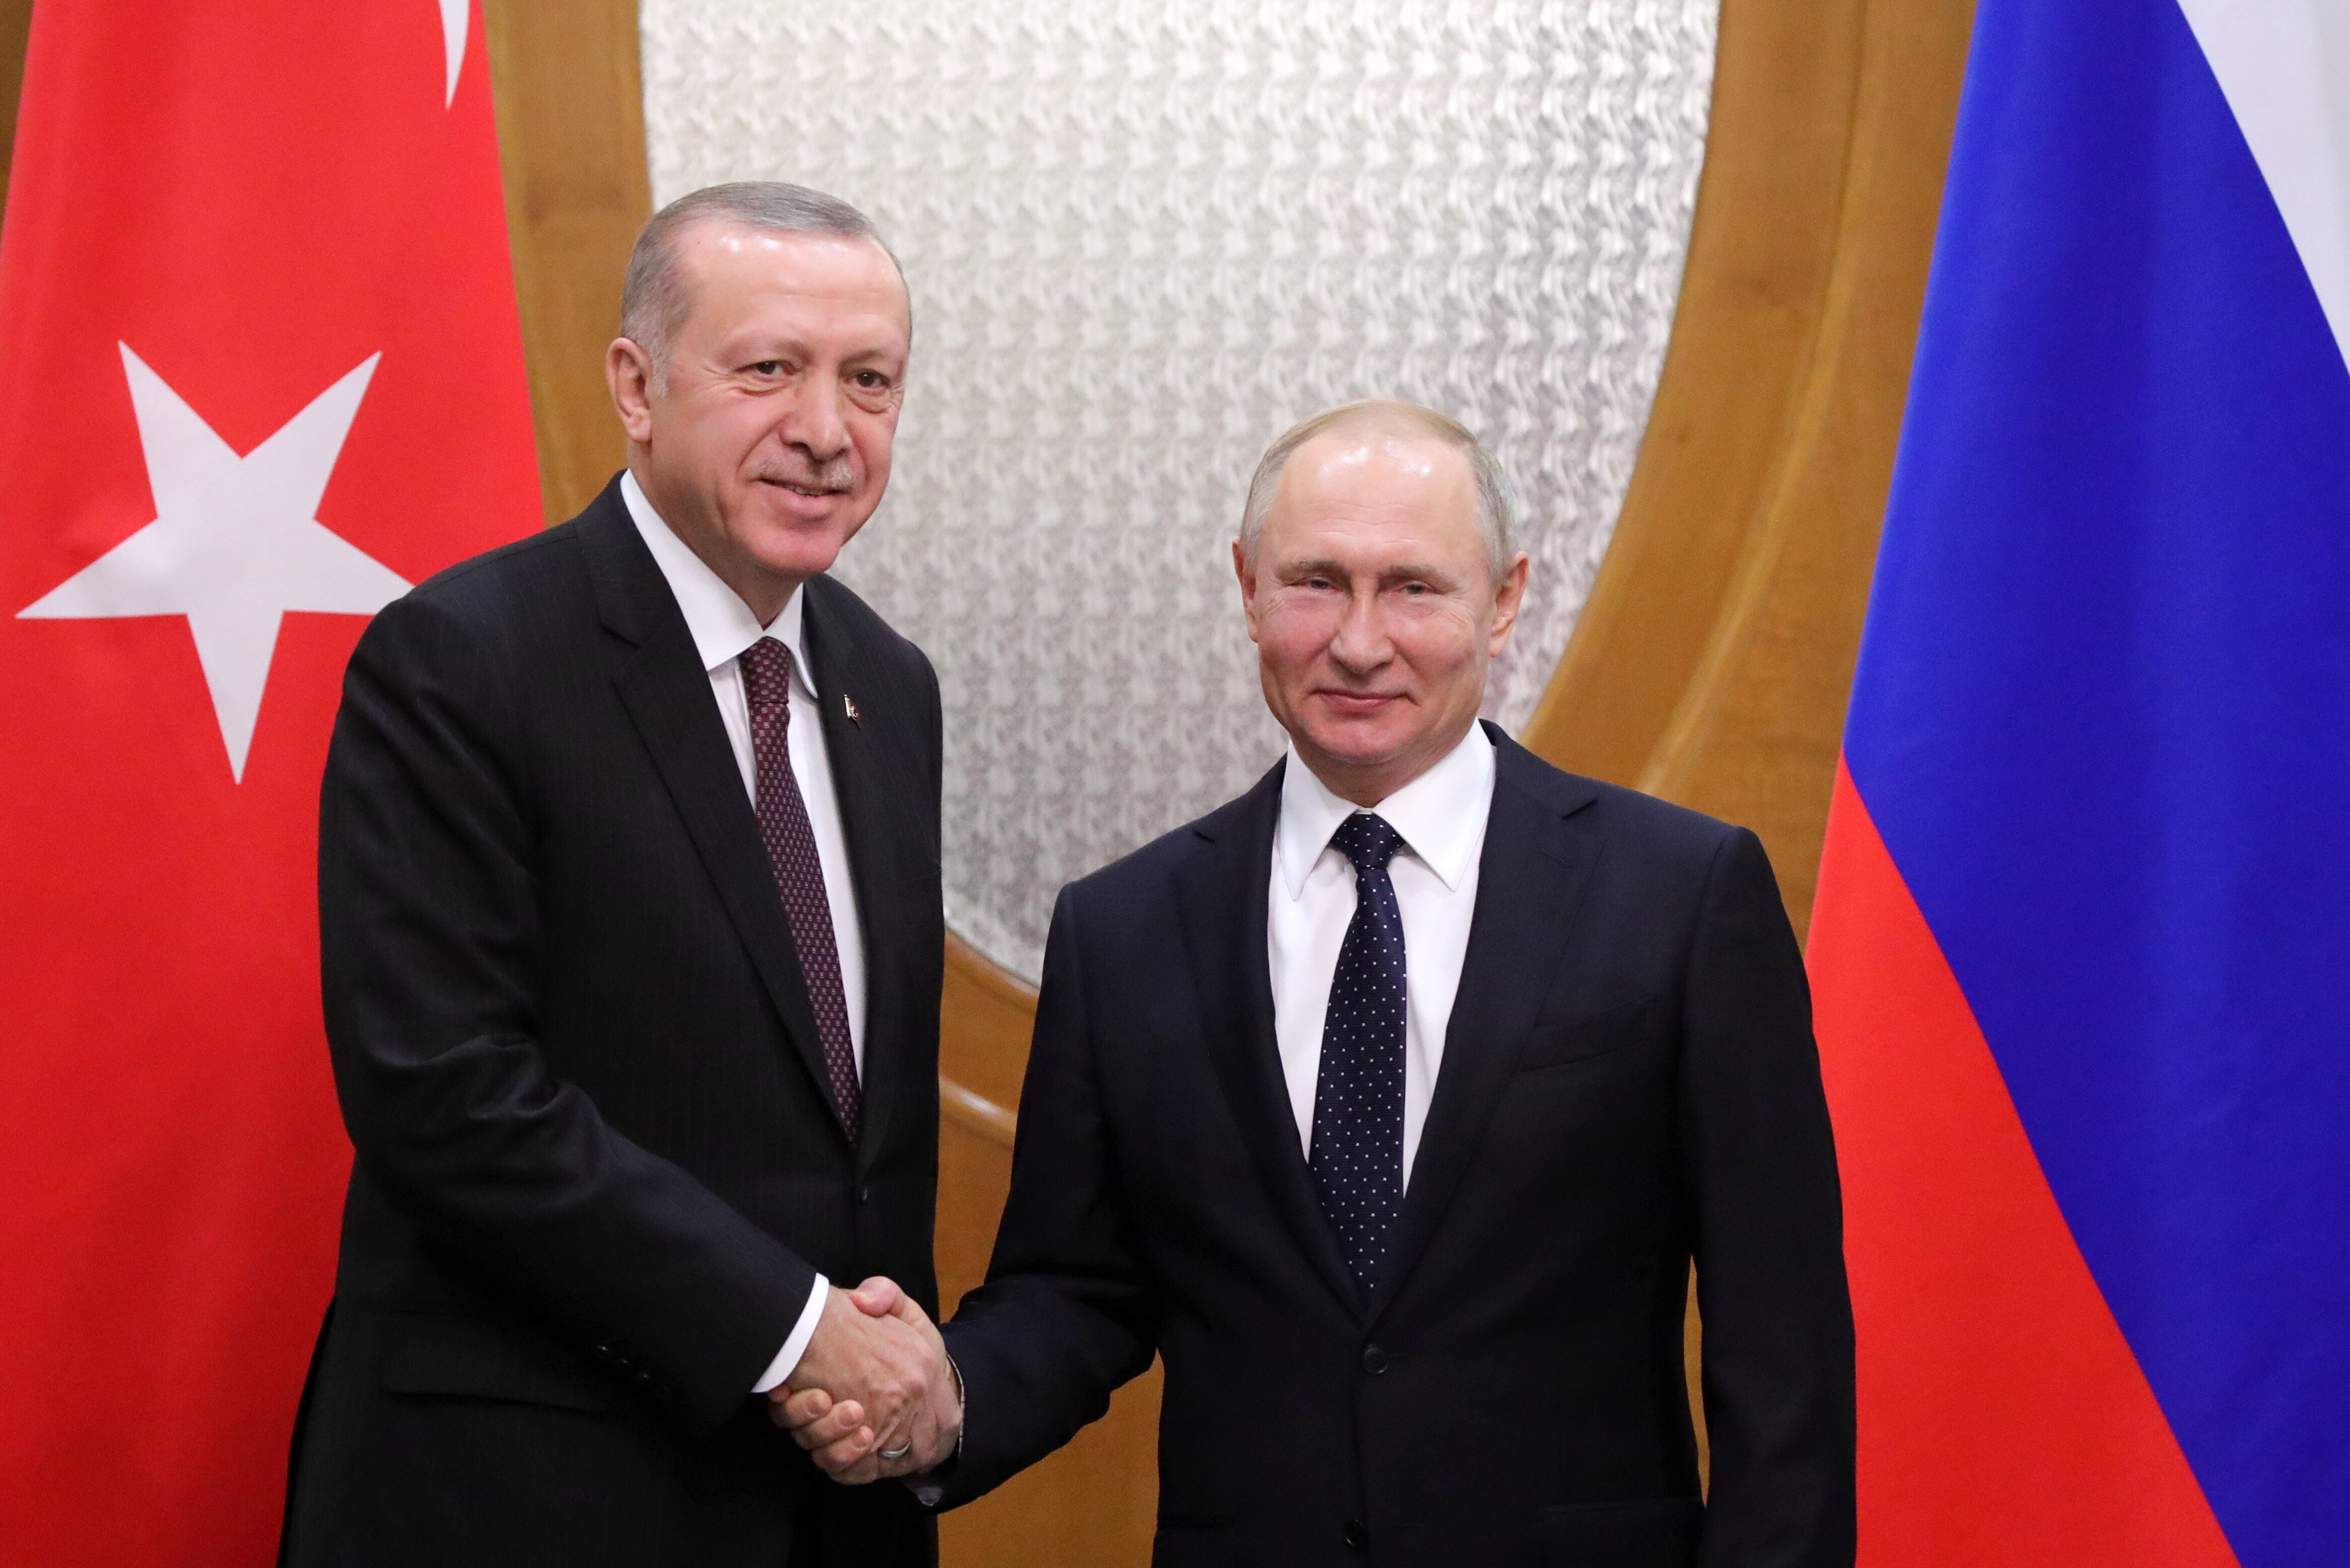 Syria targeting Turkish-Russian cooperation in Idlib, says Erdogan